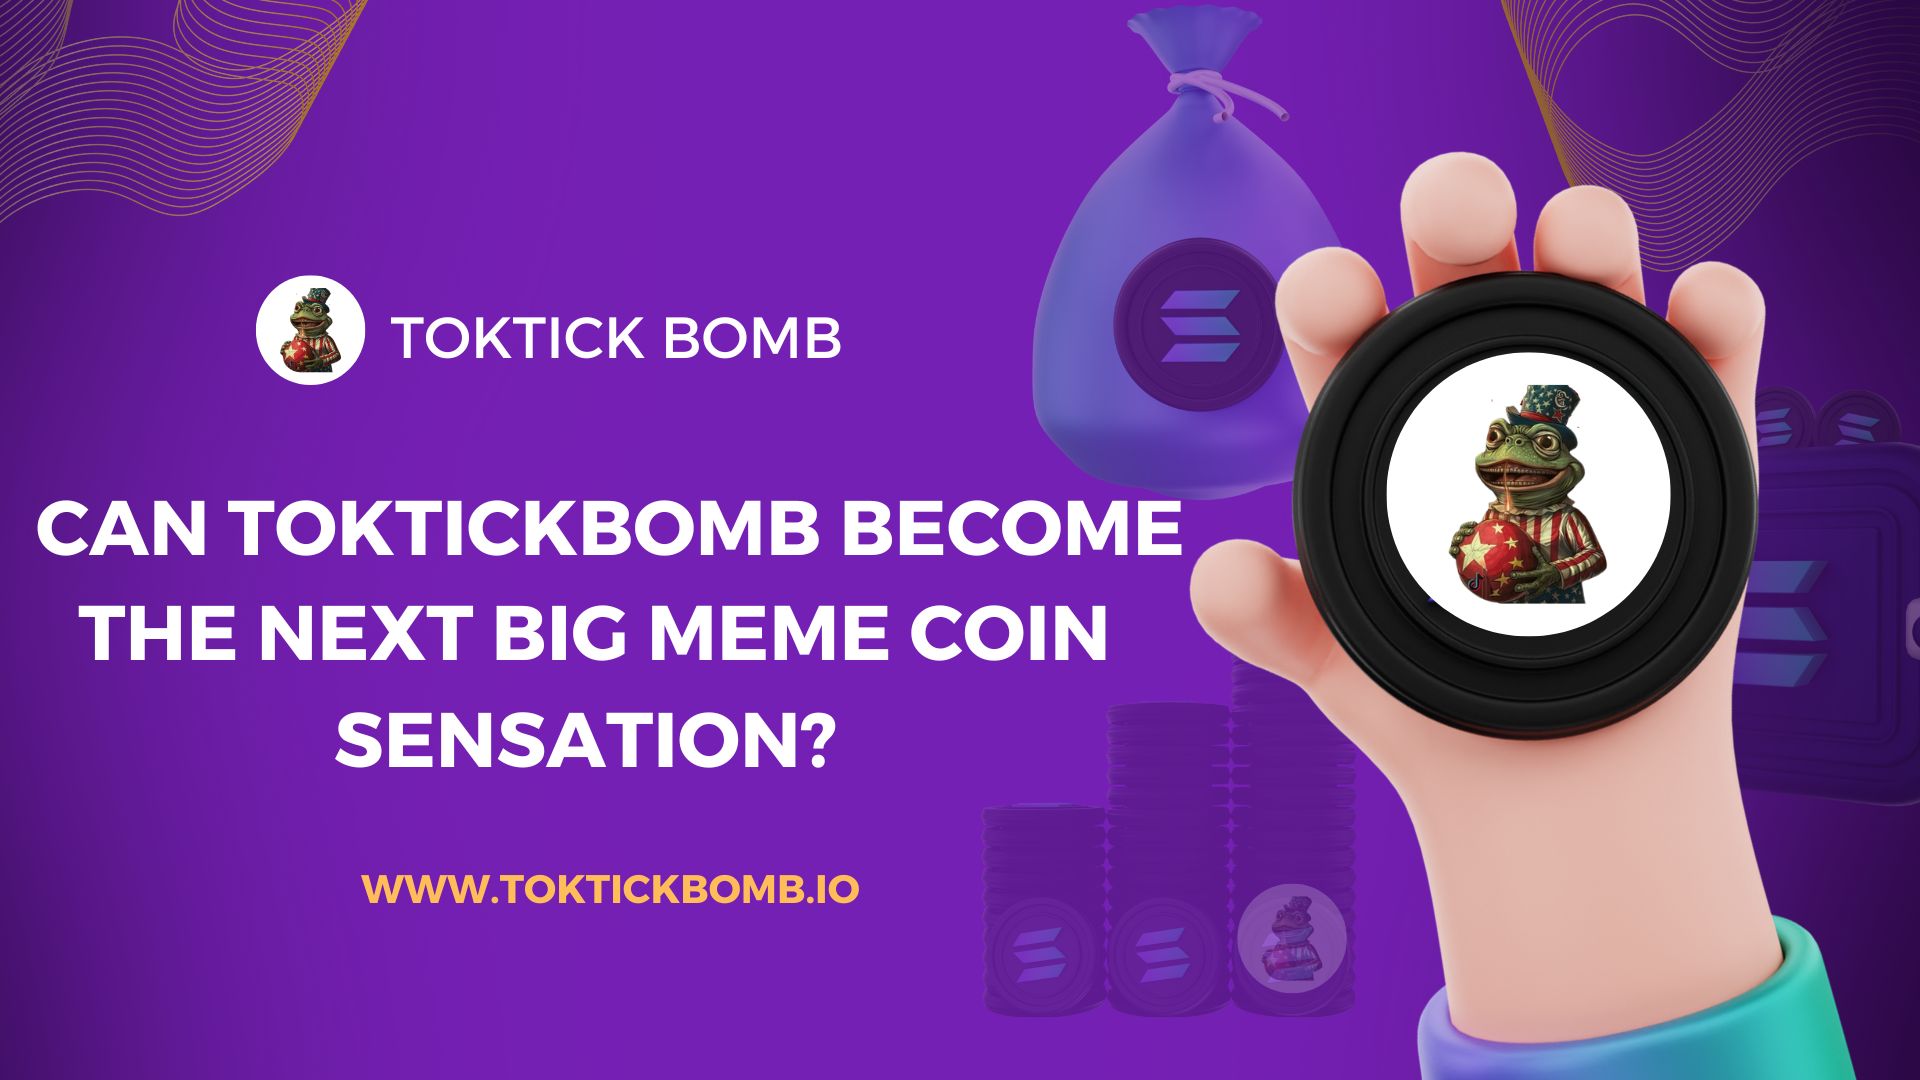 Can TokTickBomb Become the Next Big Meme Coin Sensation?